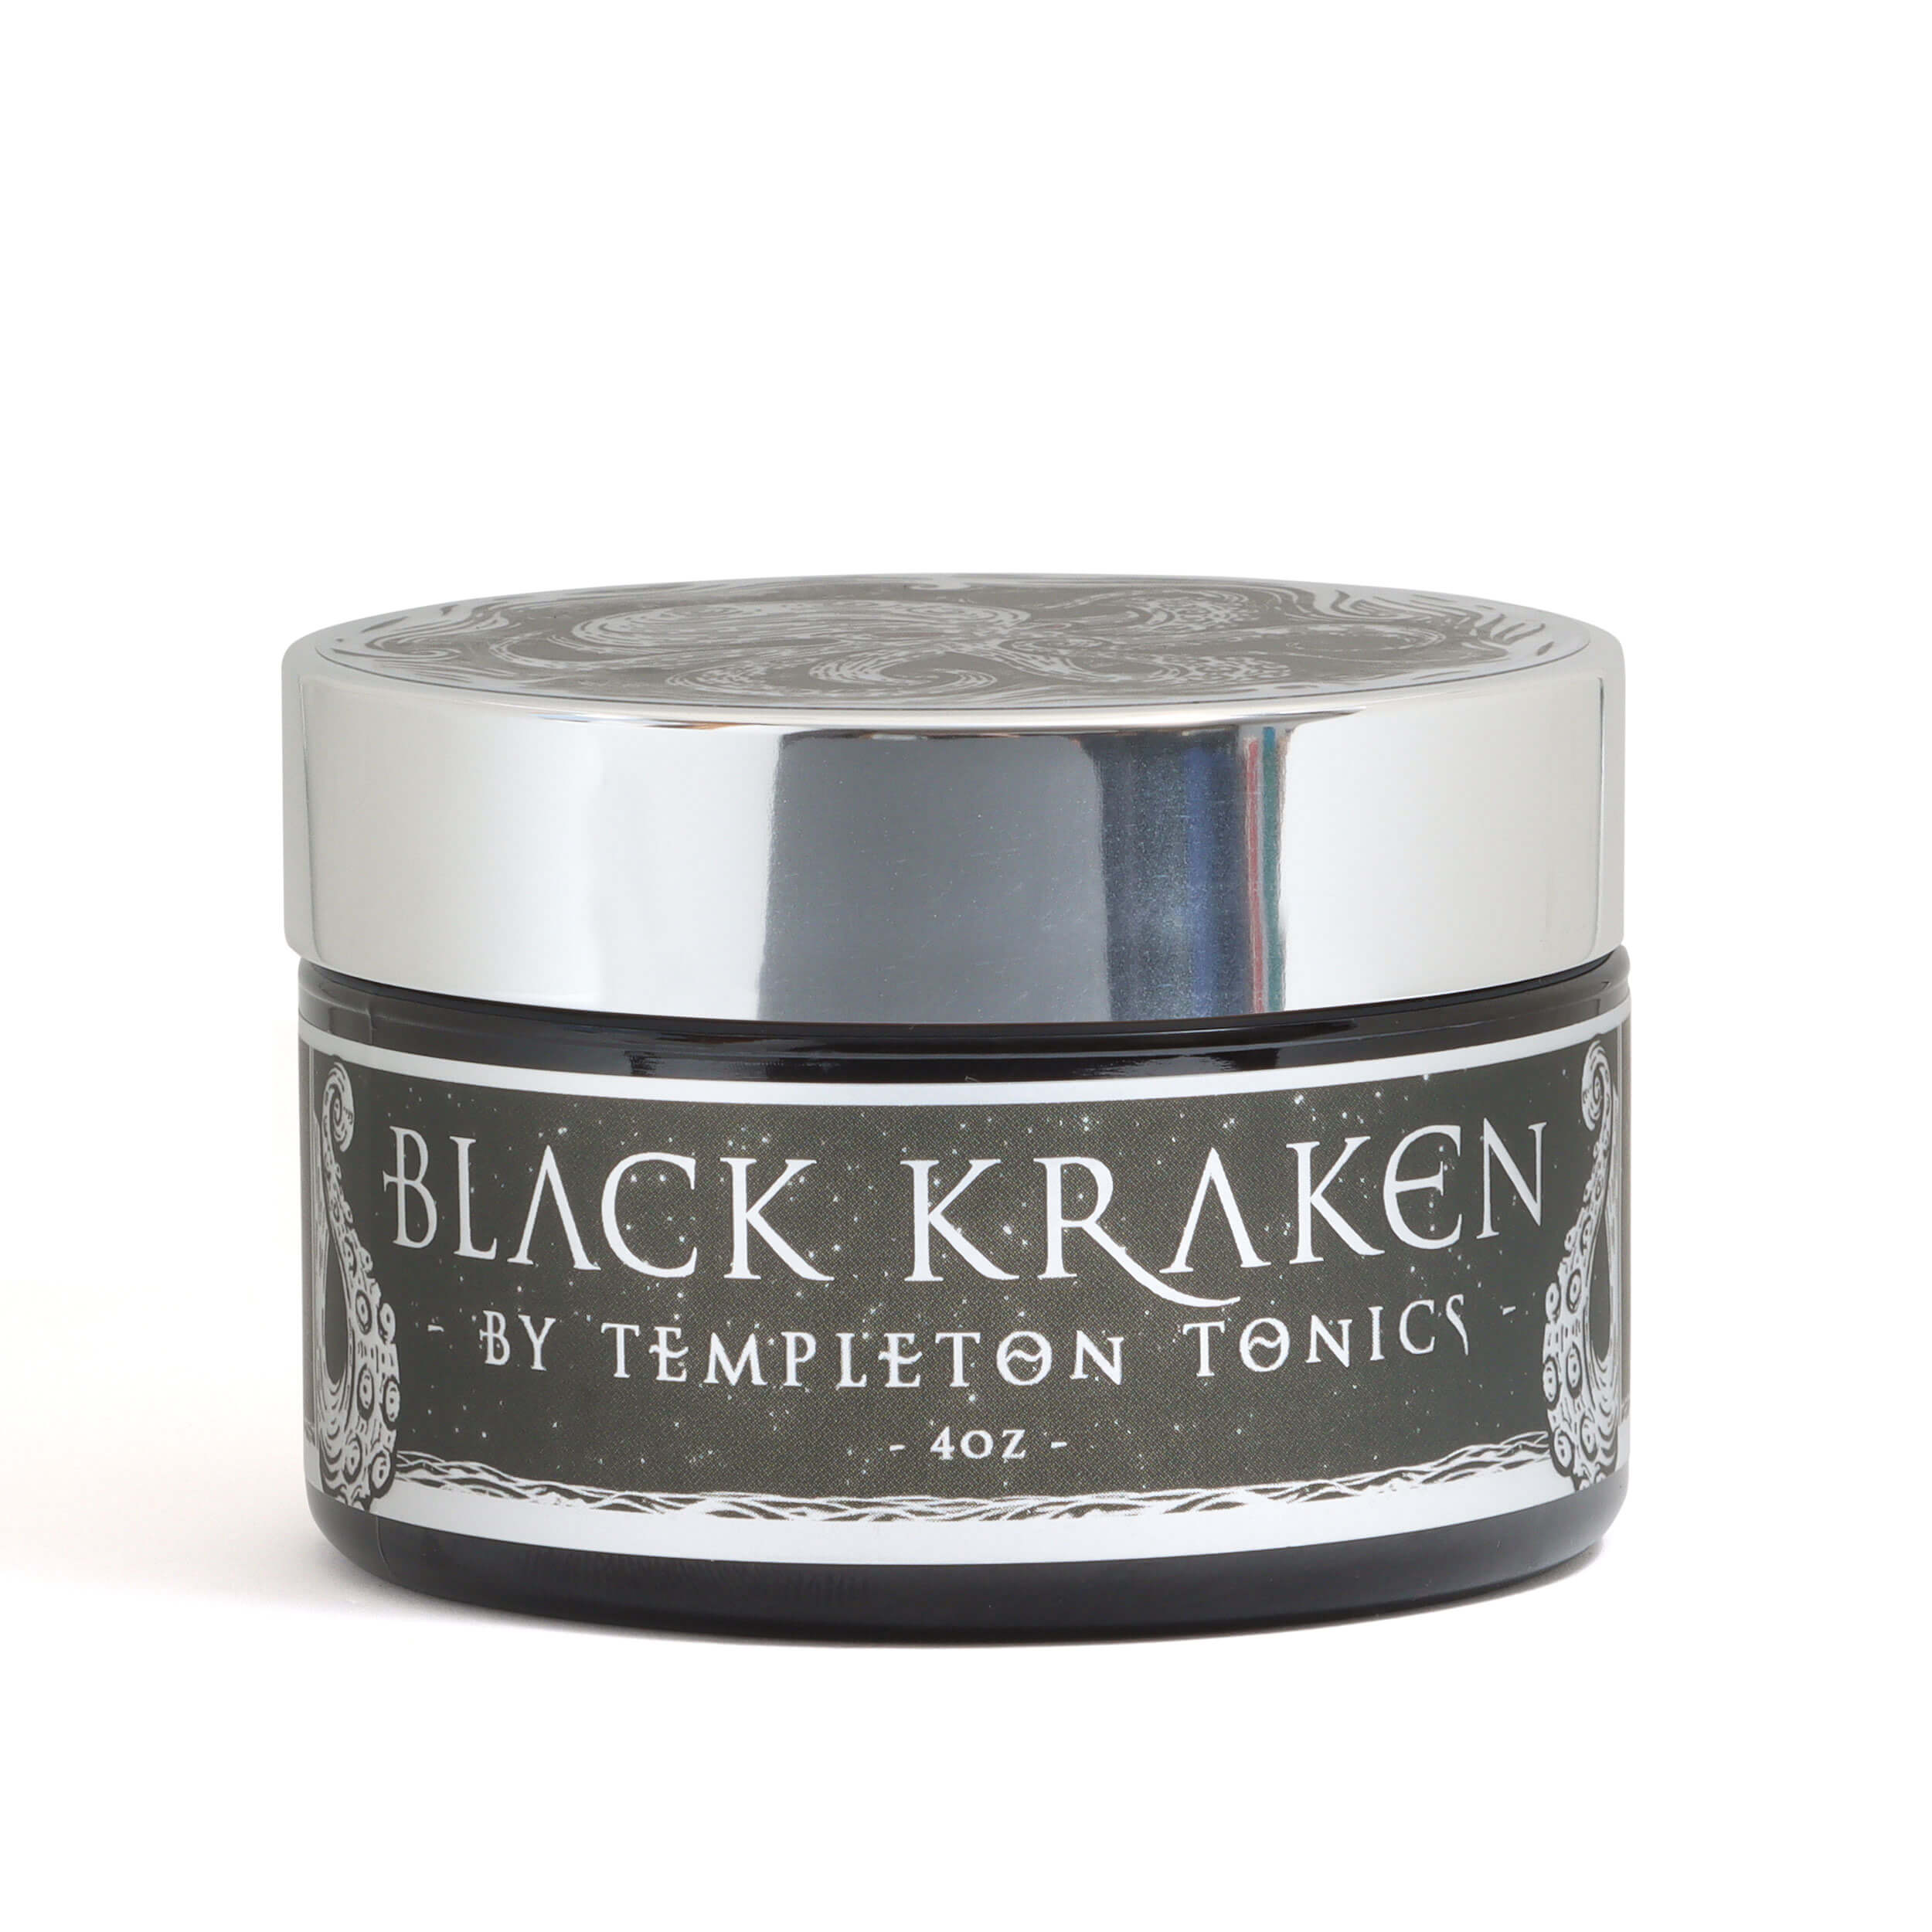 Templeton Tonics Black Kraken Clay